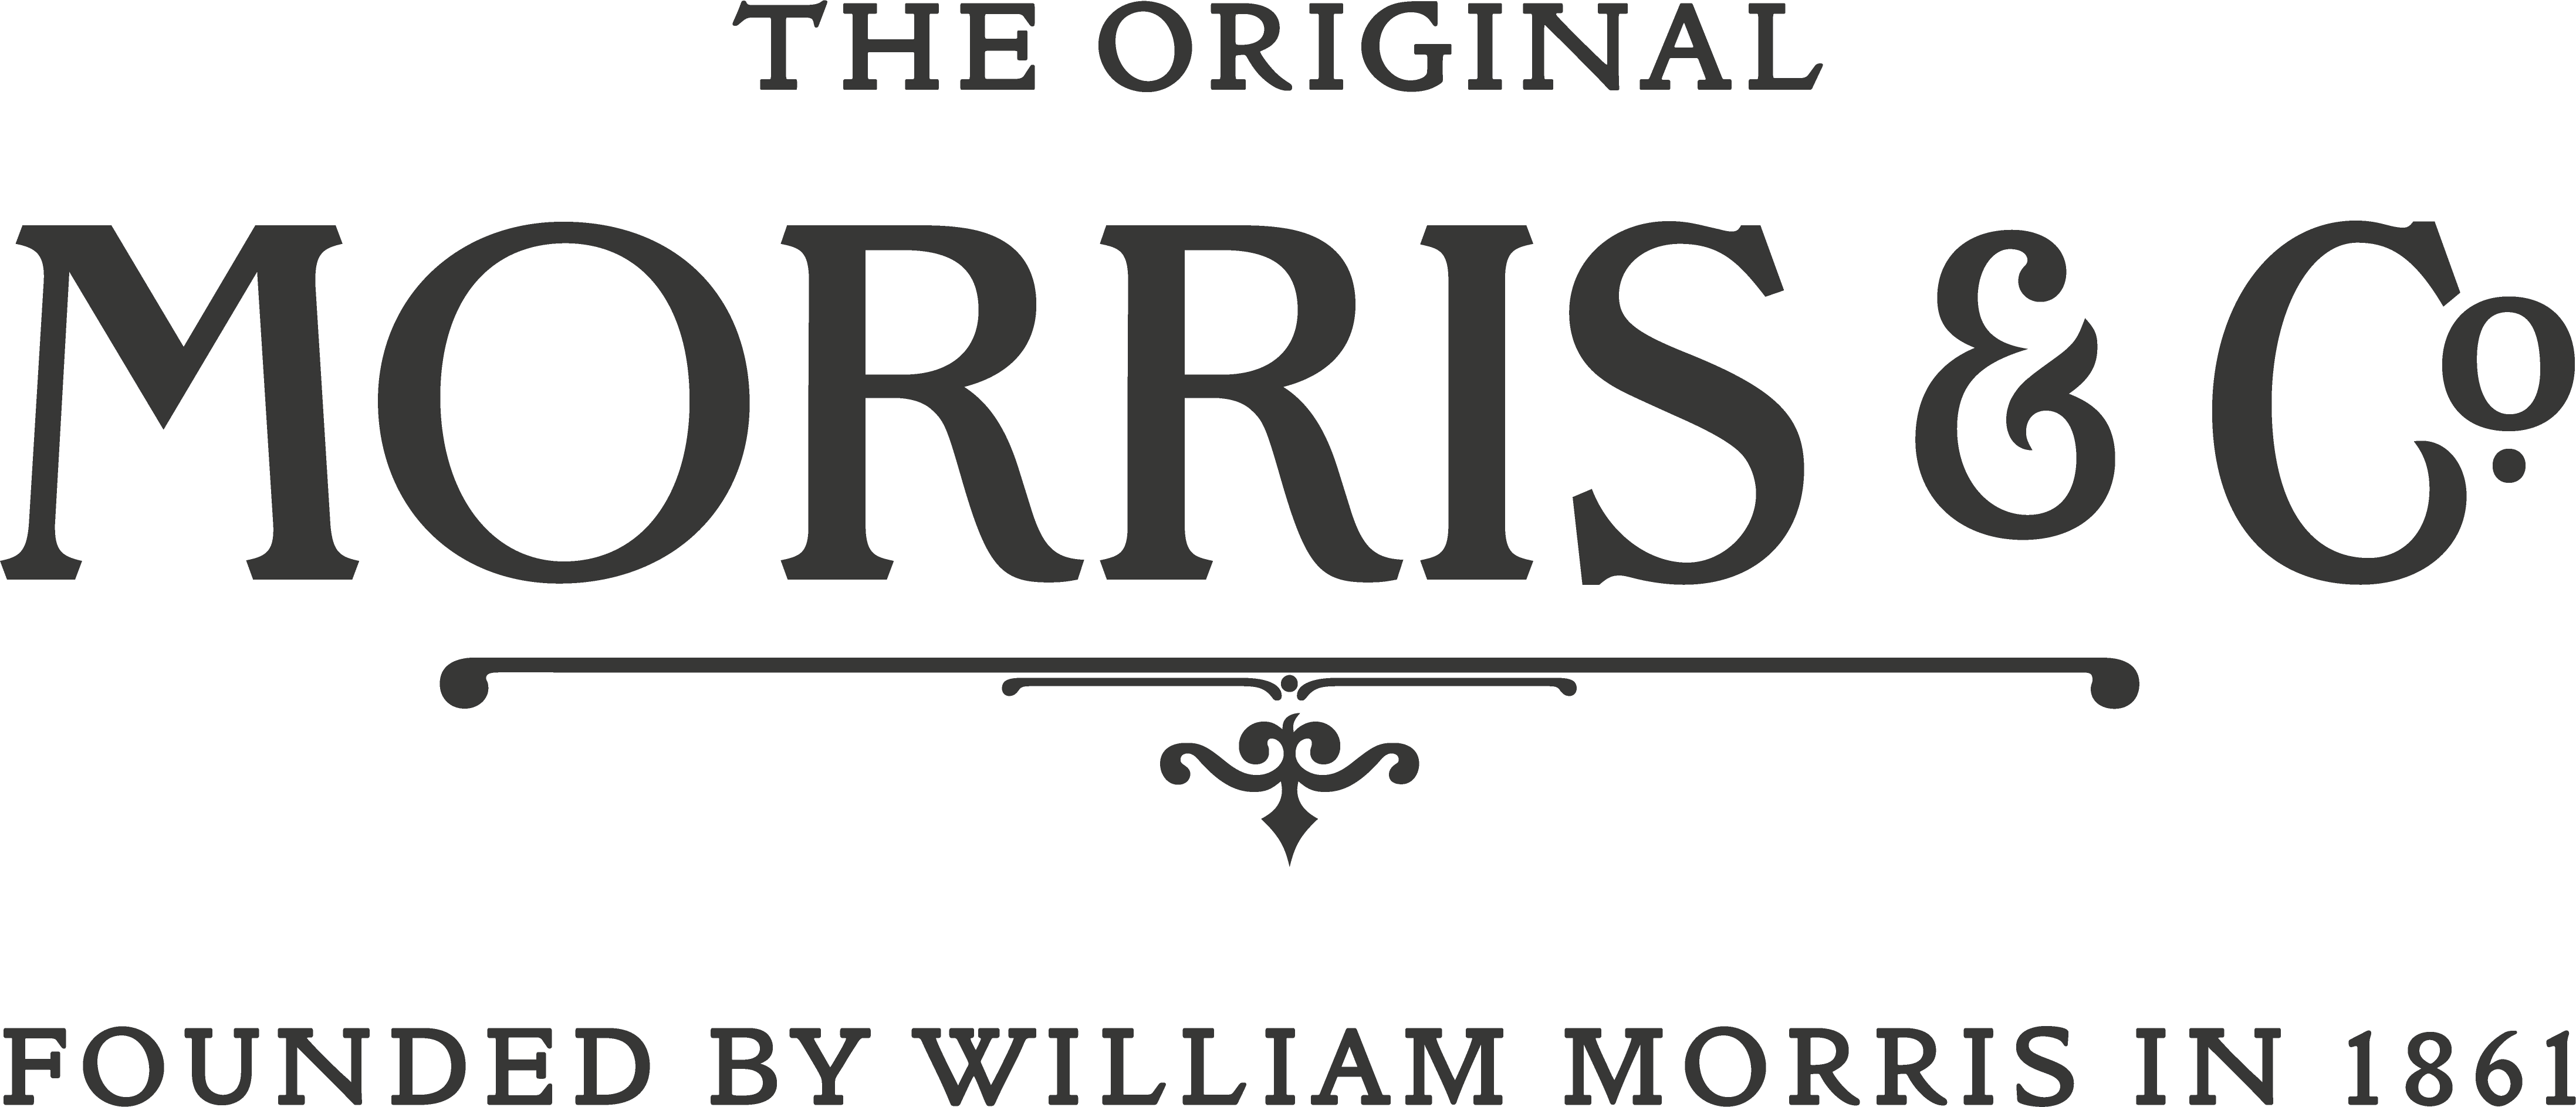 Morris&Co